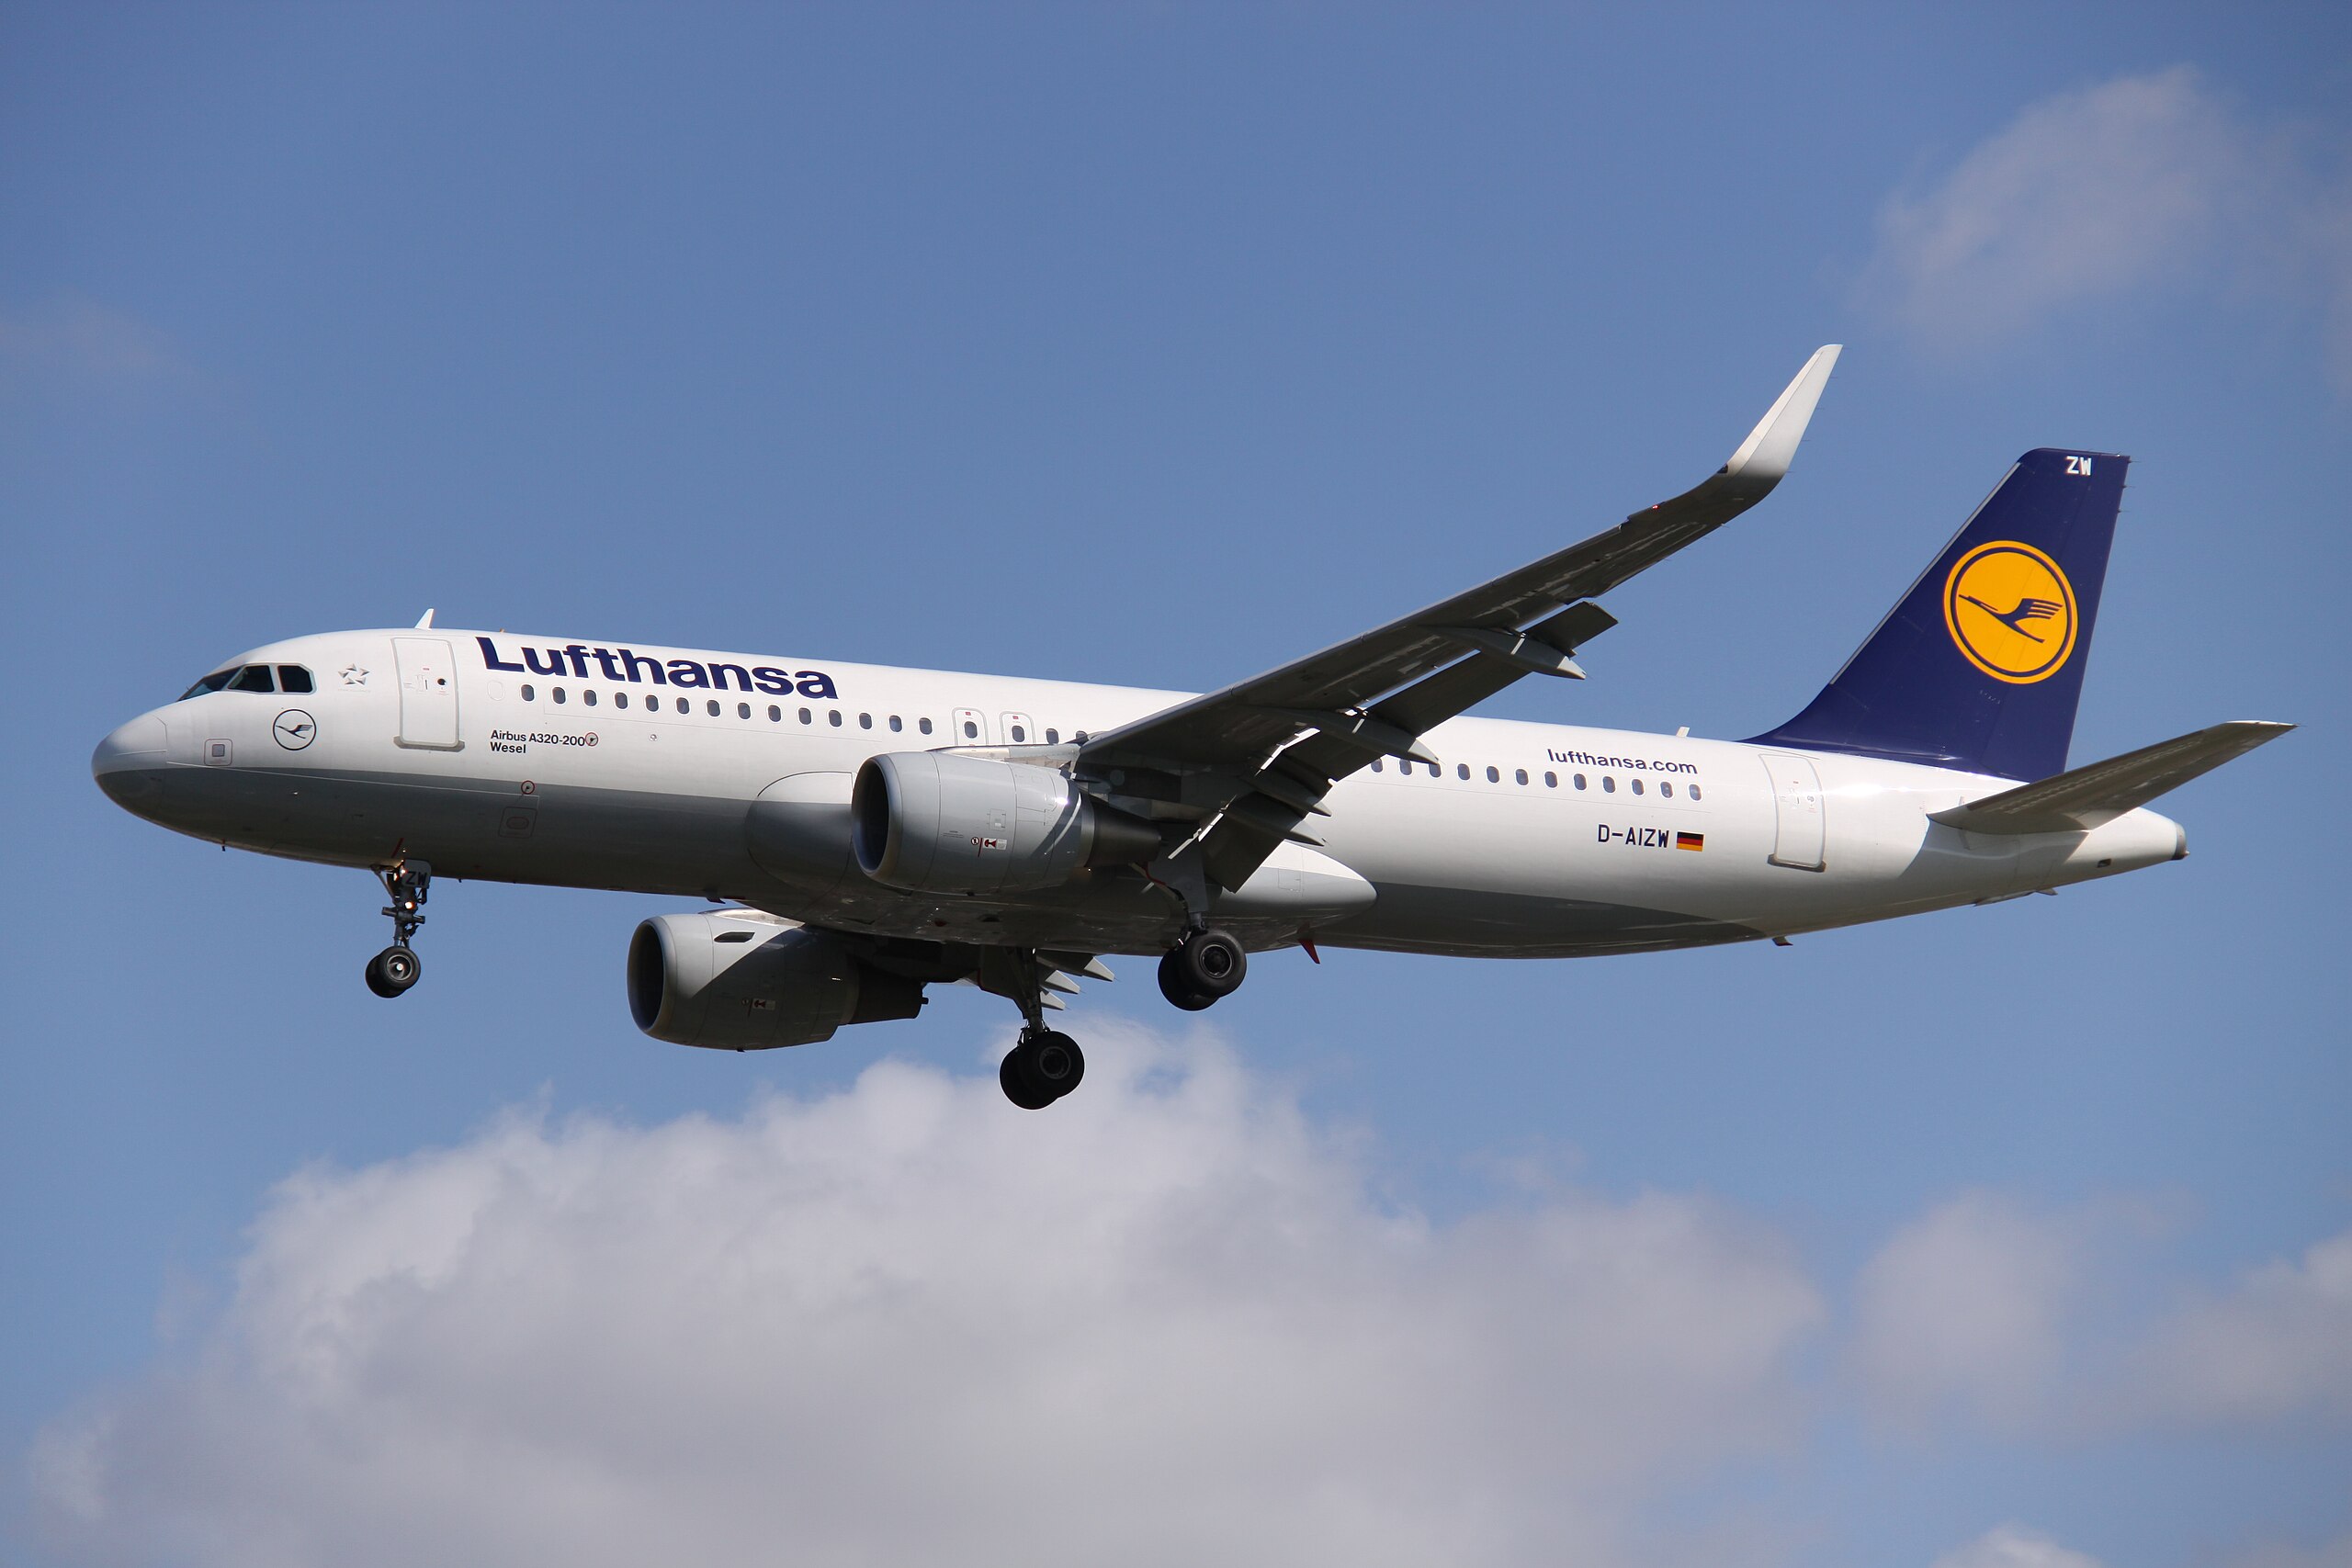 File:D-AIZW Airbus A320SL Lufthansa (13895029054).jpg - Wikipedia